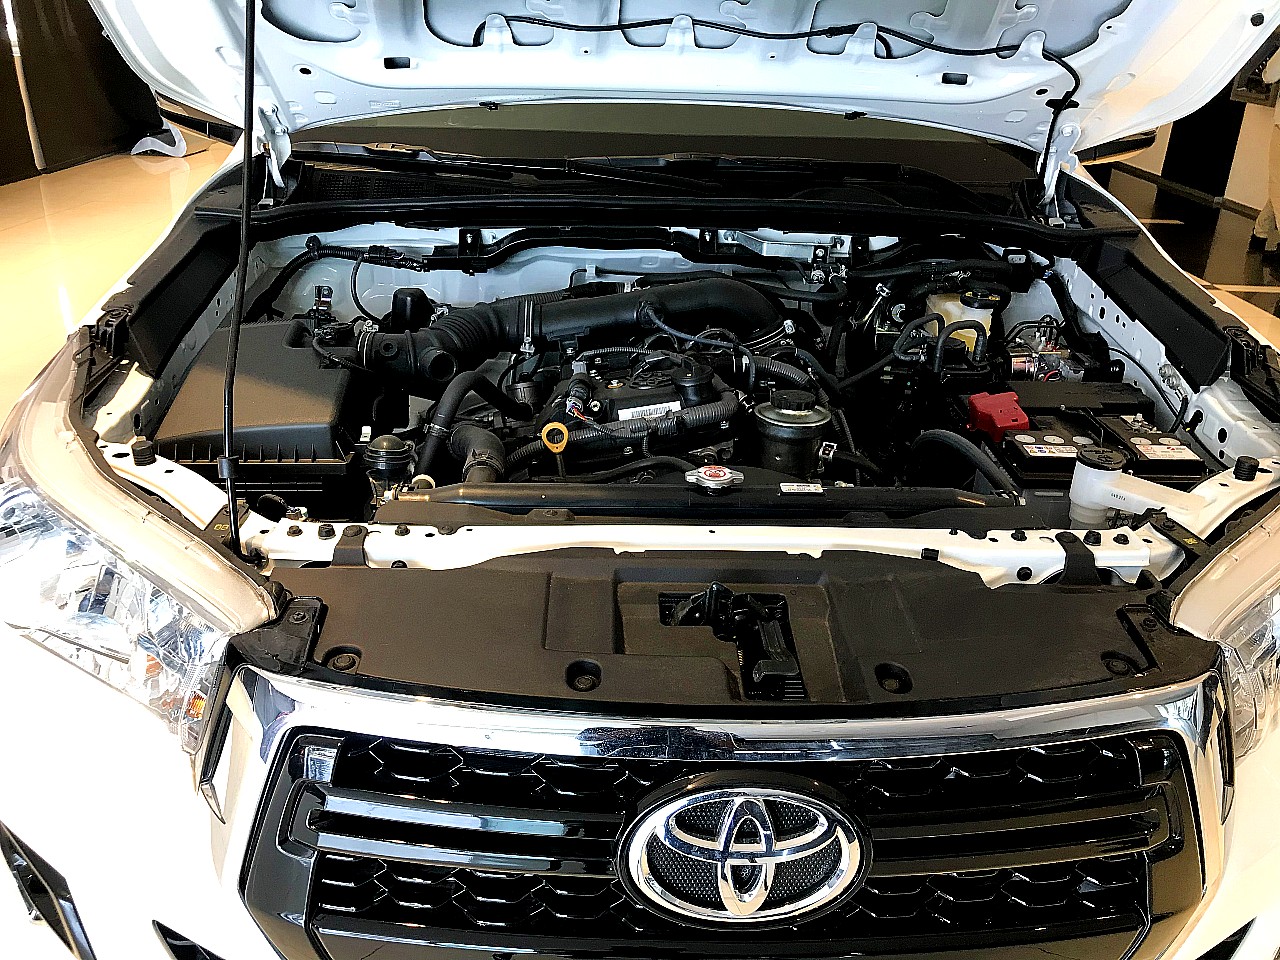 Toyota Hilux 2019 Model Engine